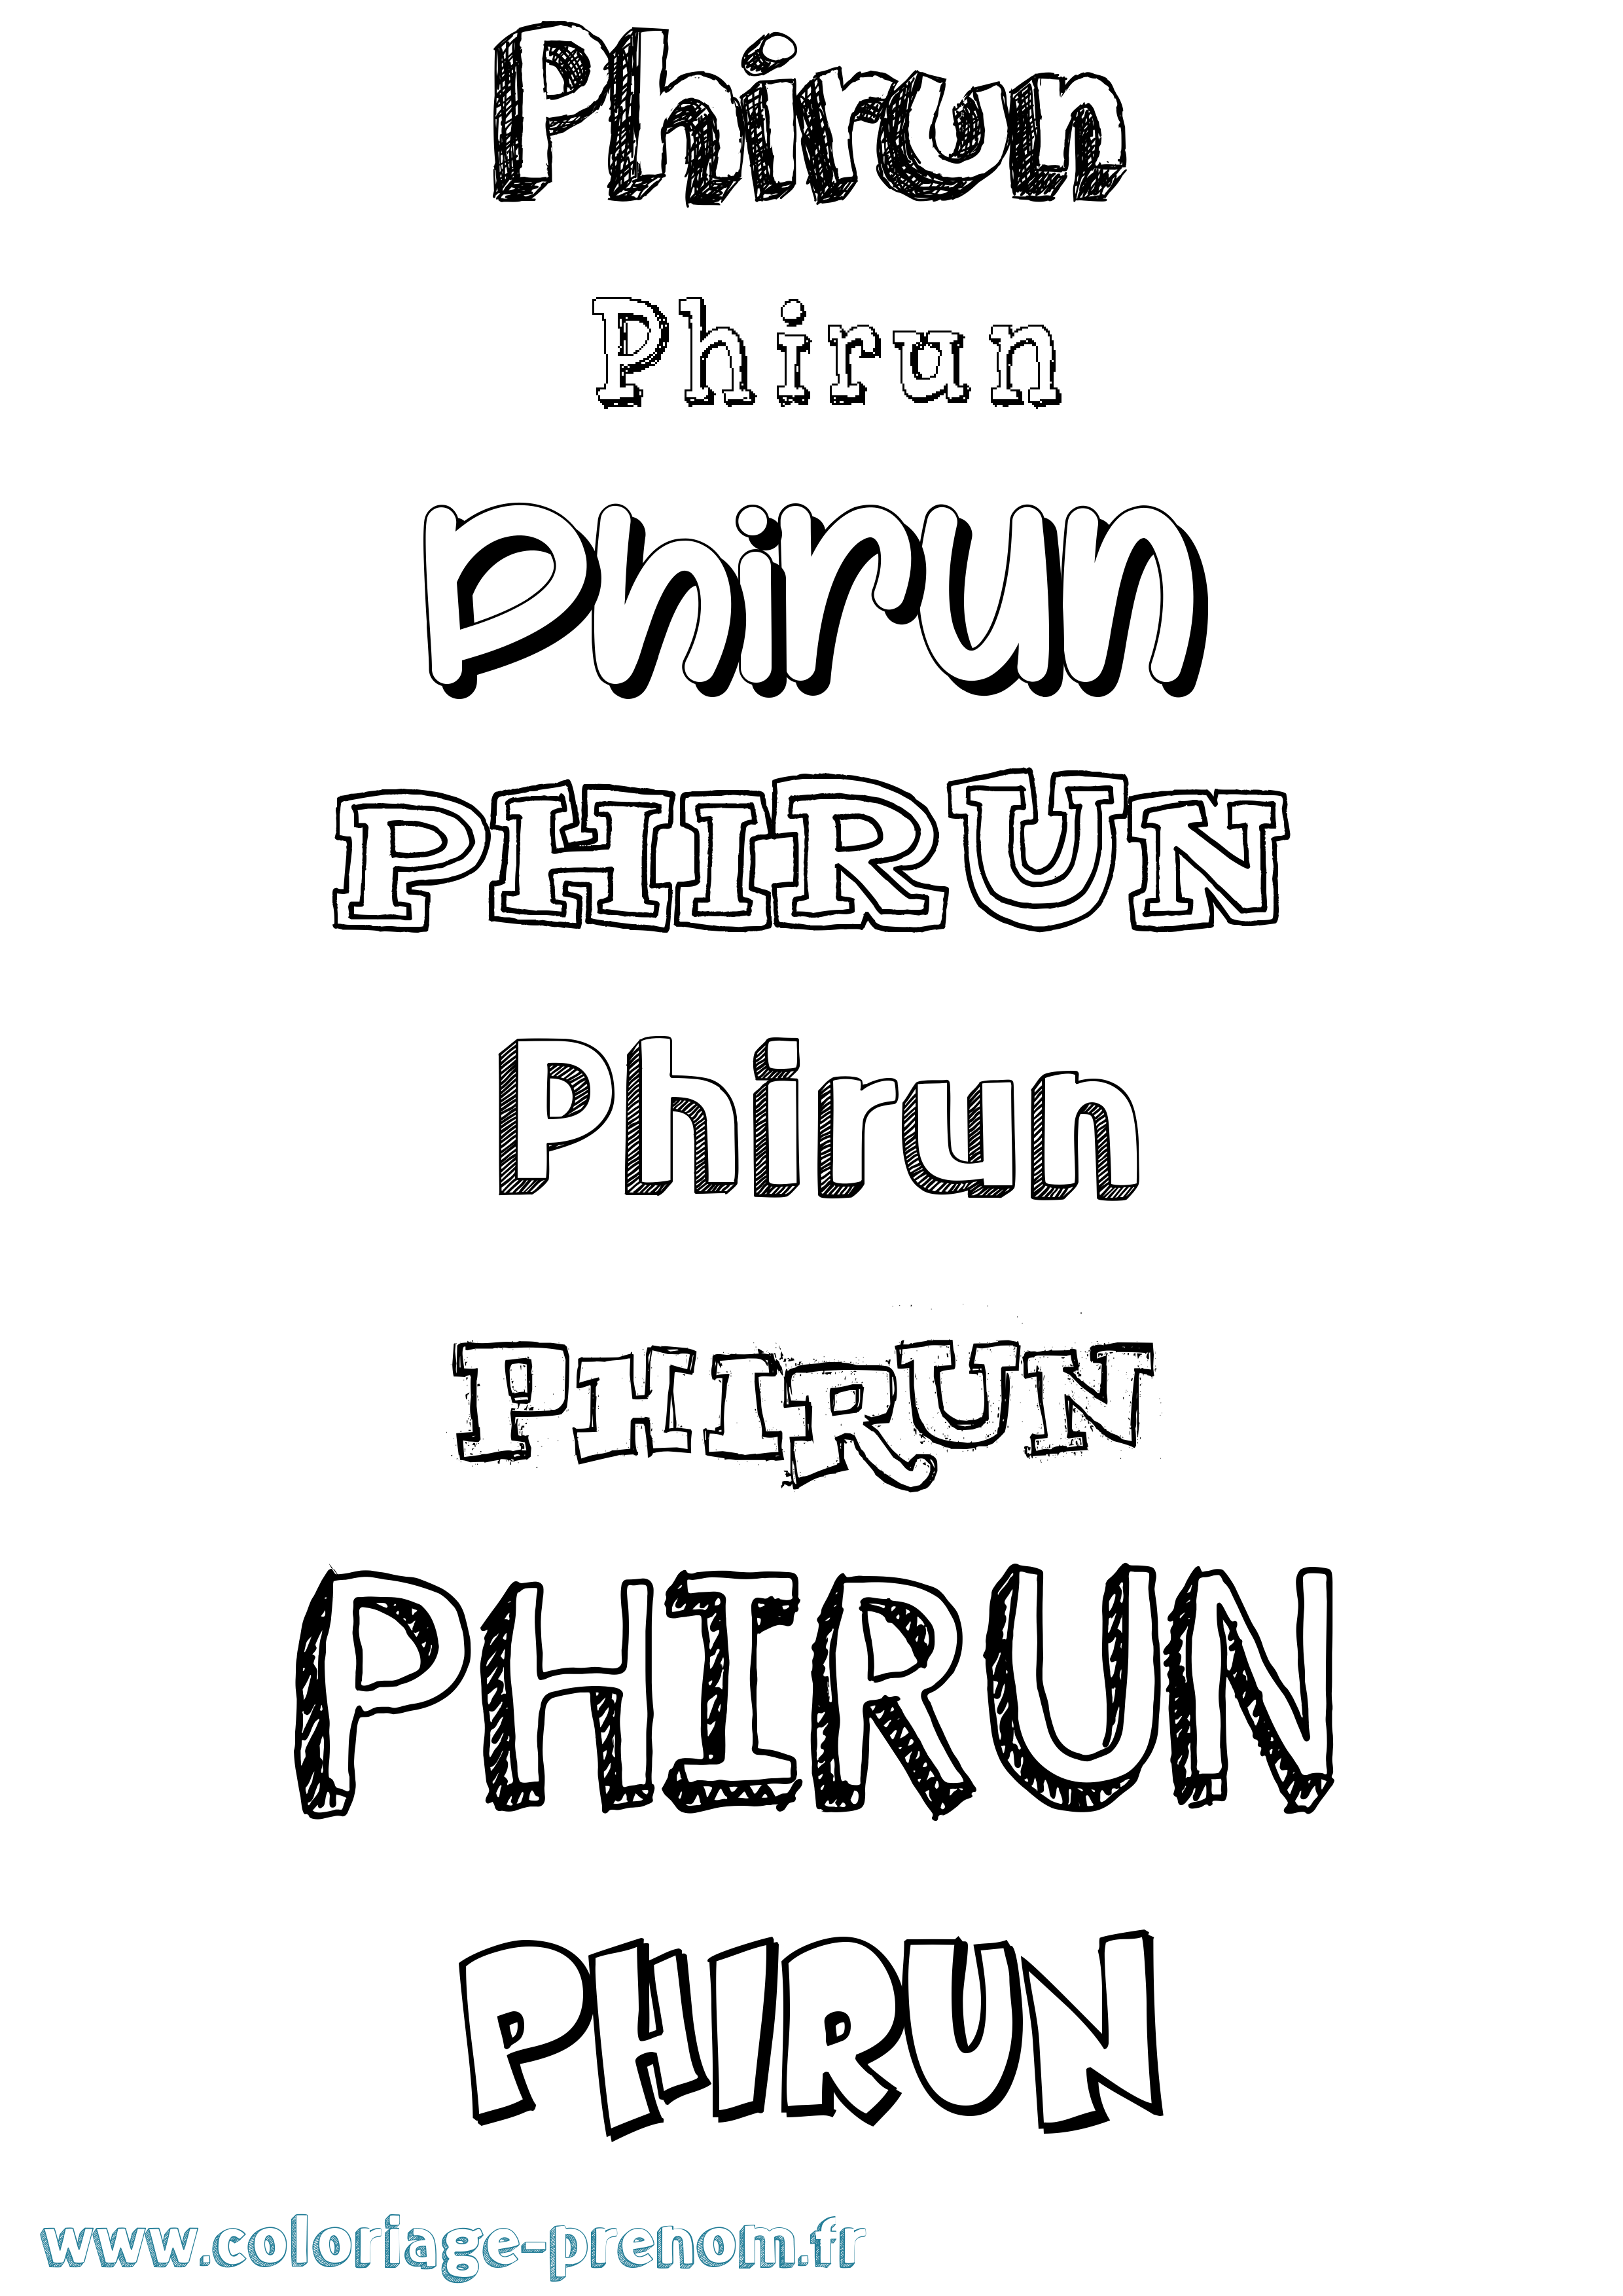 Coloriage prénom Phirun Dessiné